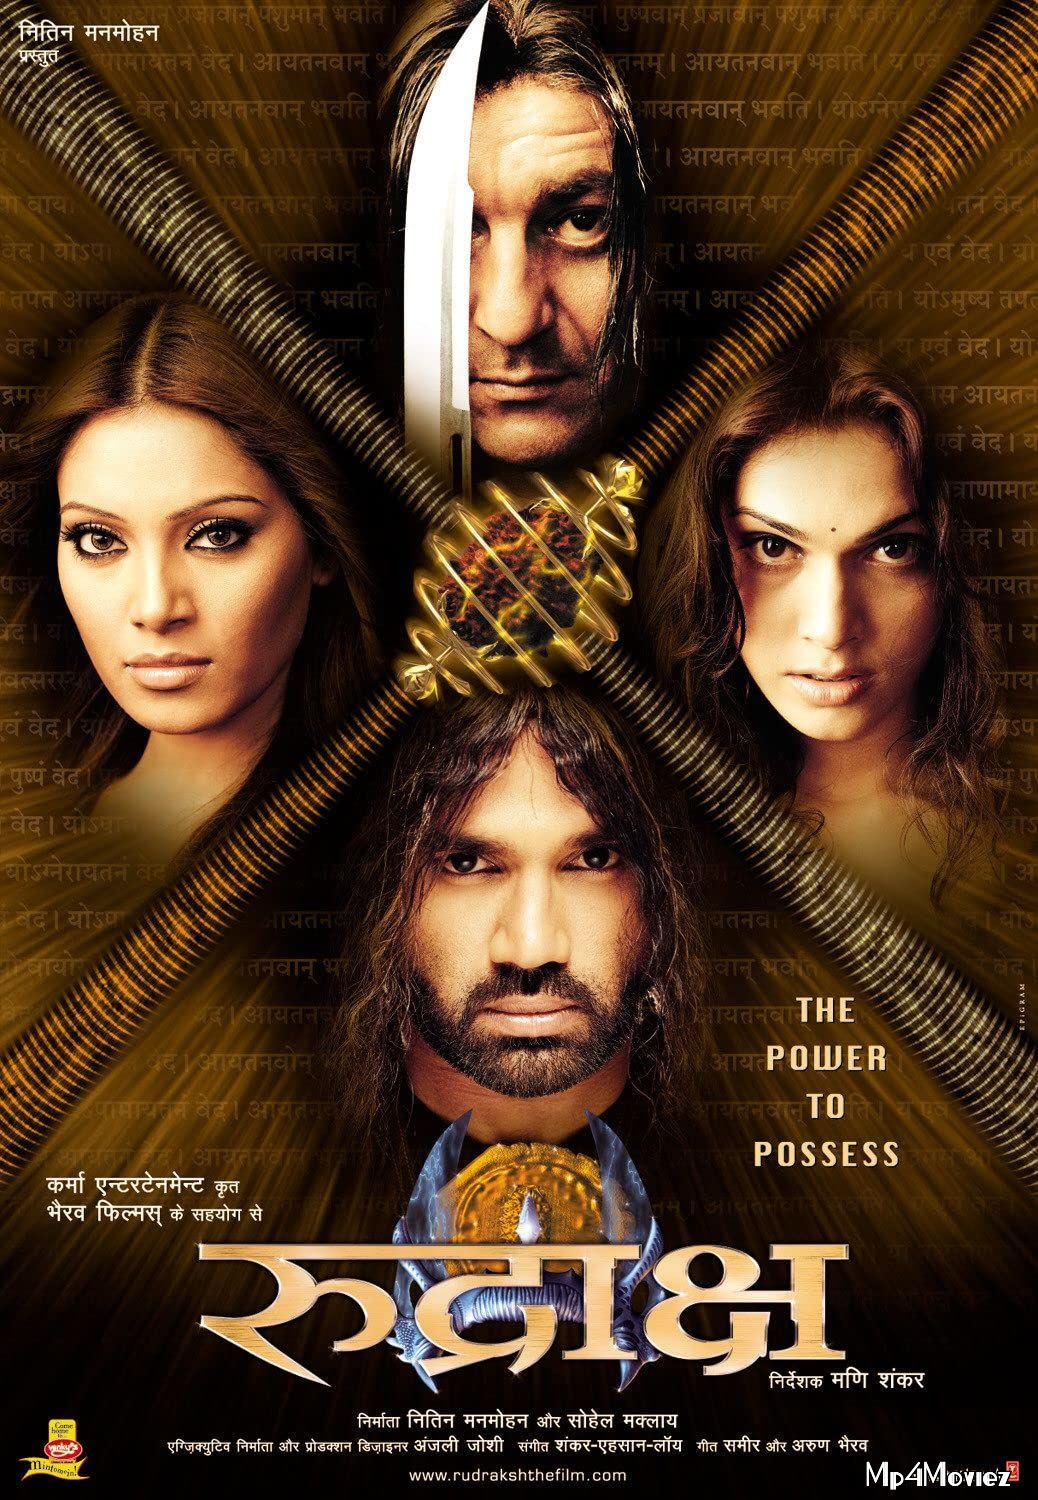 Rudraksh (2004) Hindi Full Movie download full movie